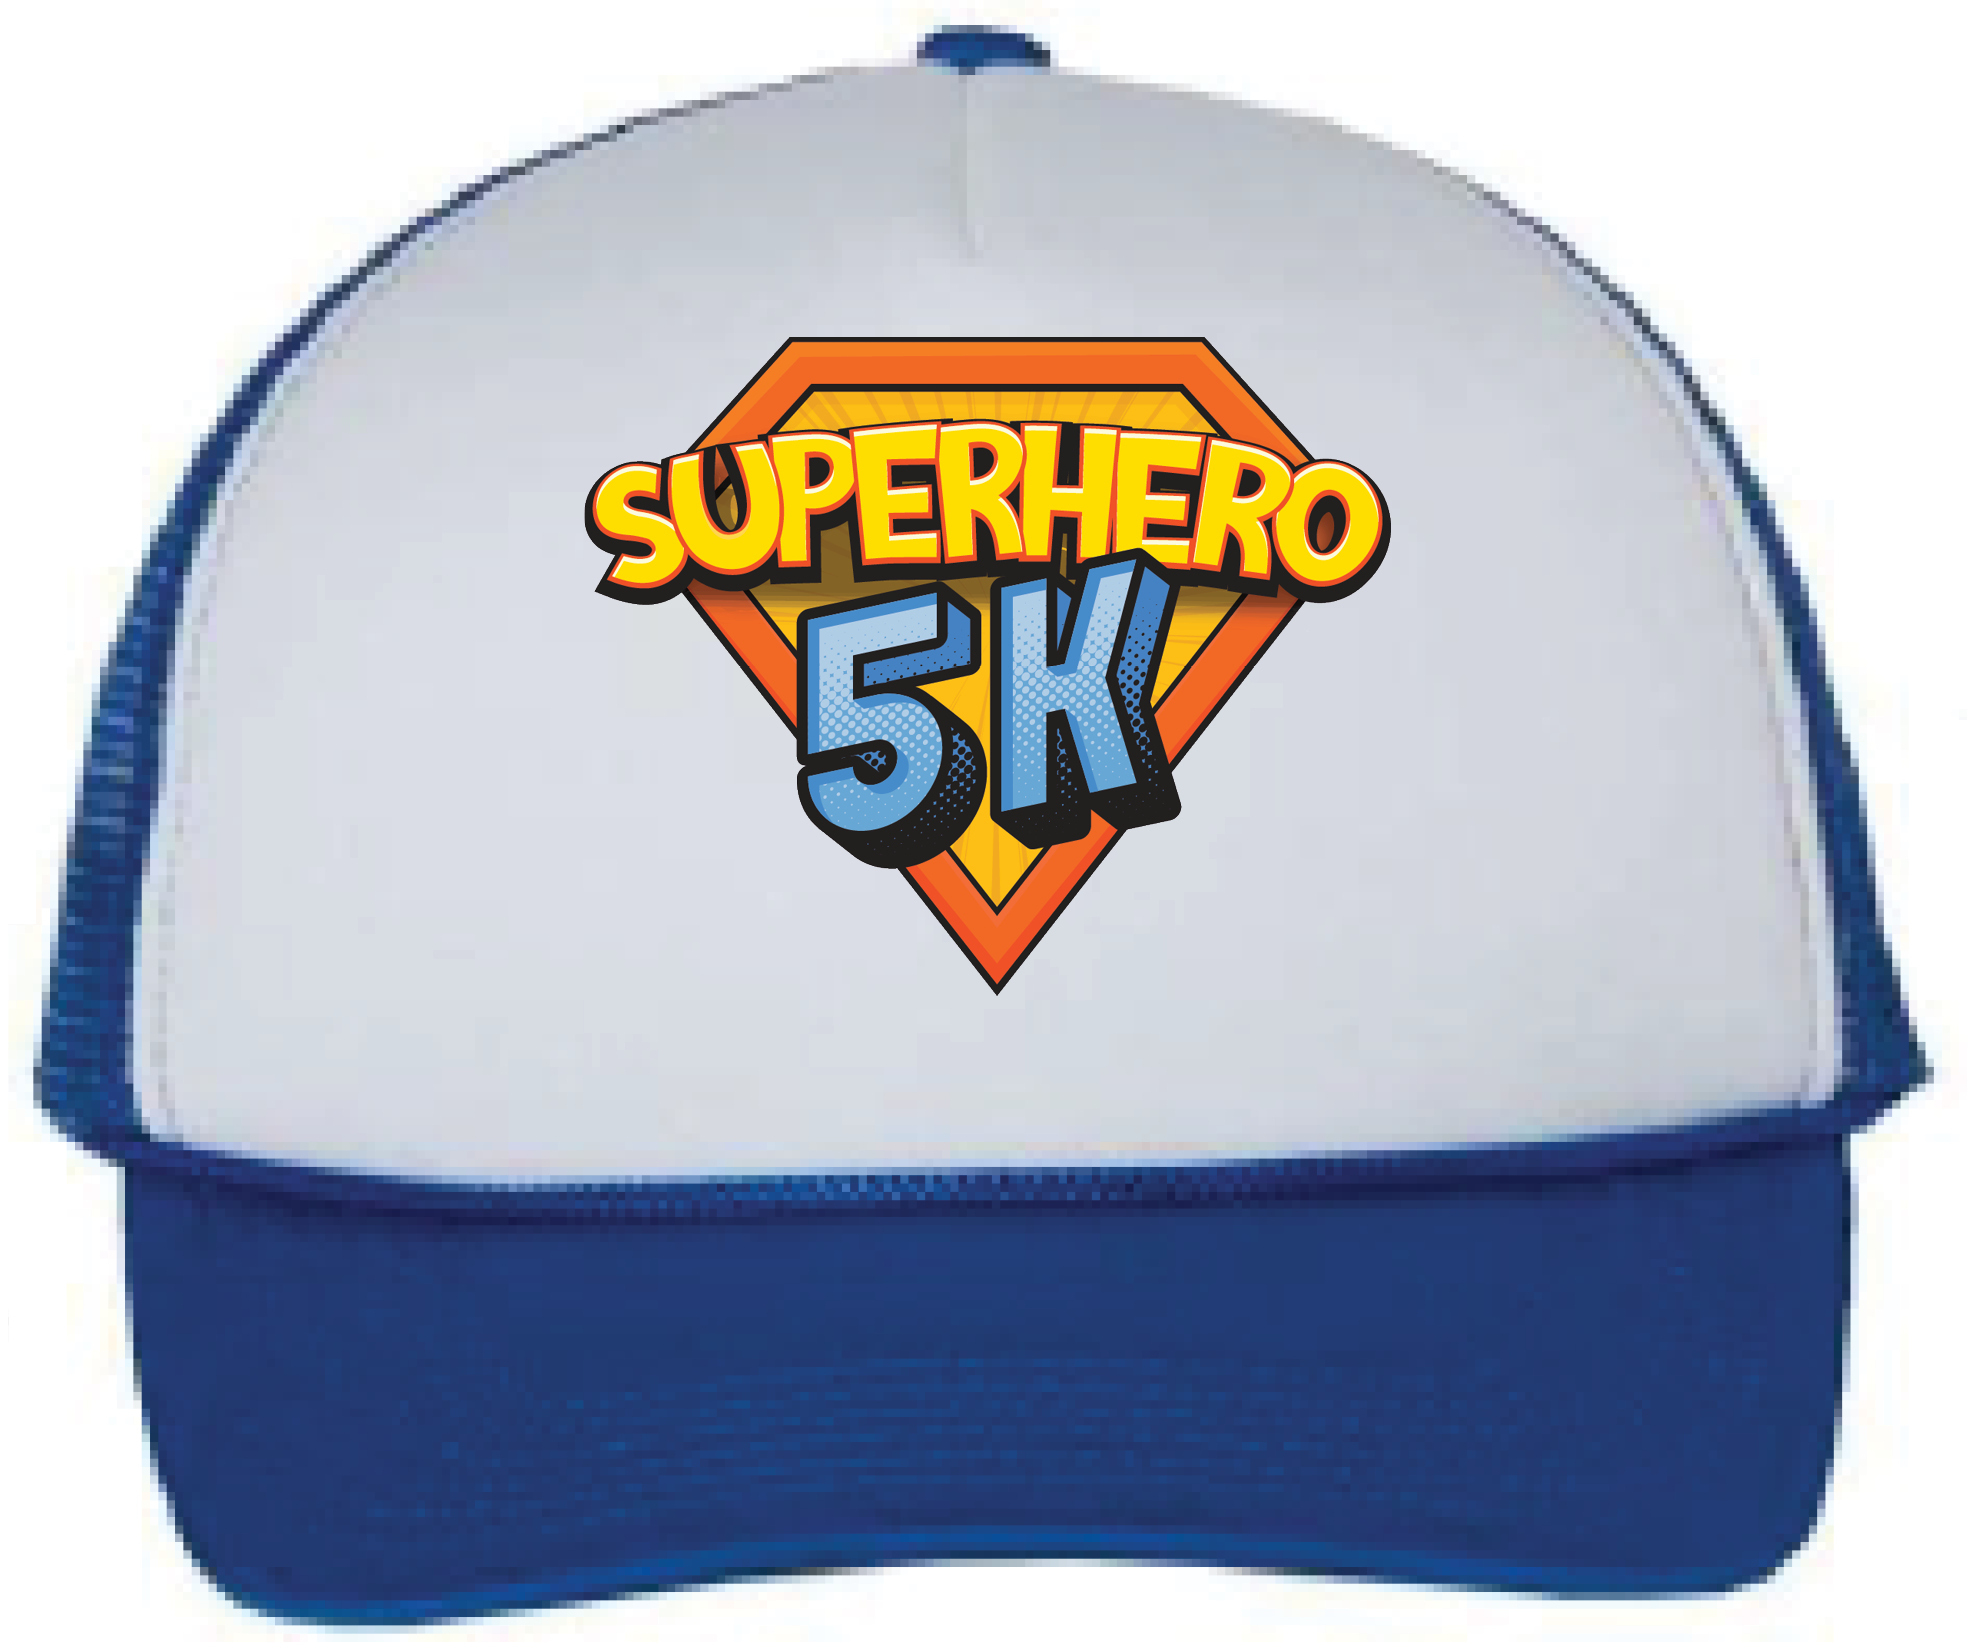 Superhero 5K hat